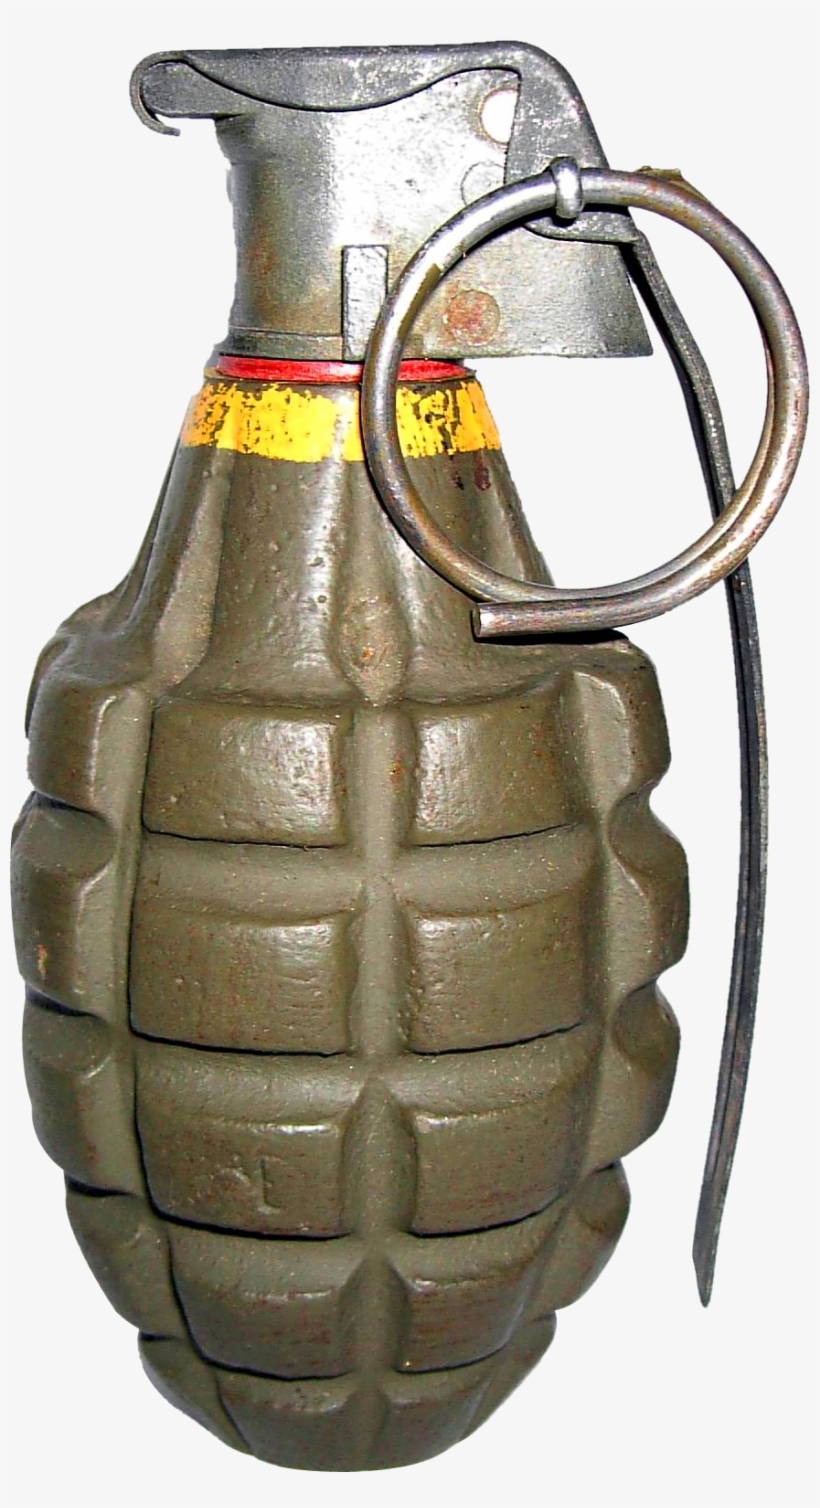 Grenade Png Image - Passport To Peril Ebook, transparent png #4387044